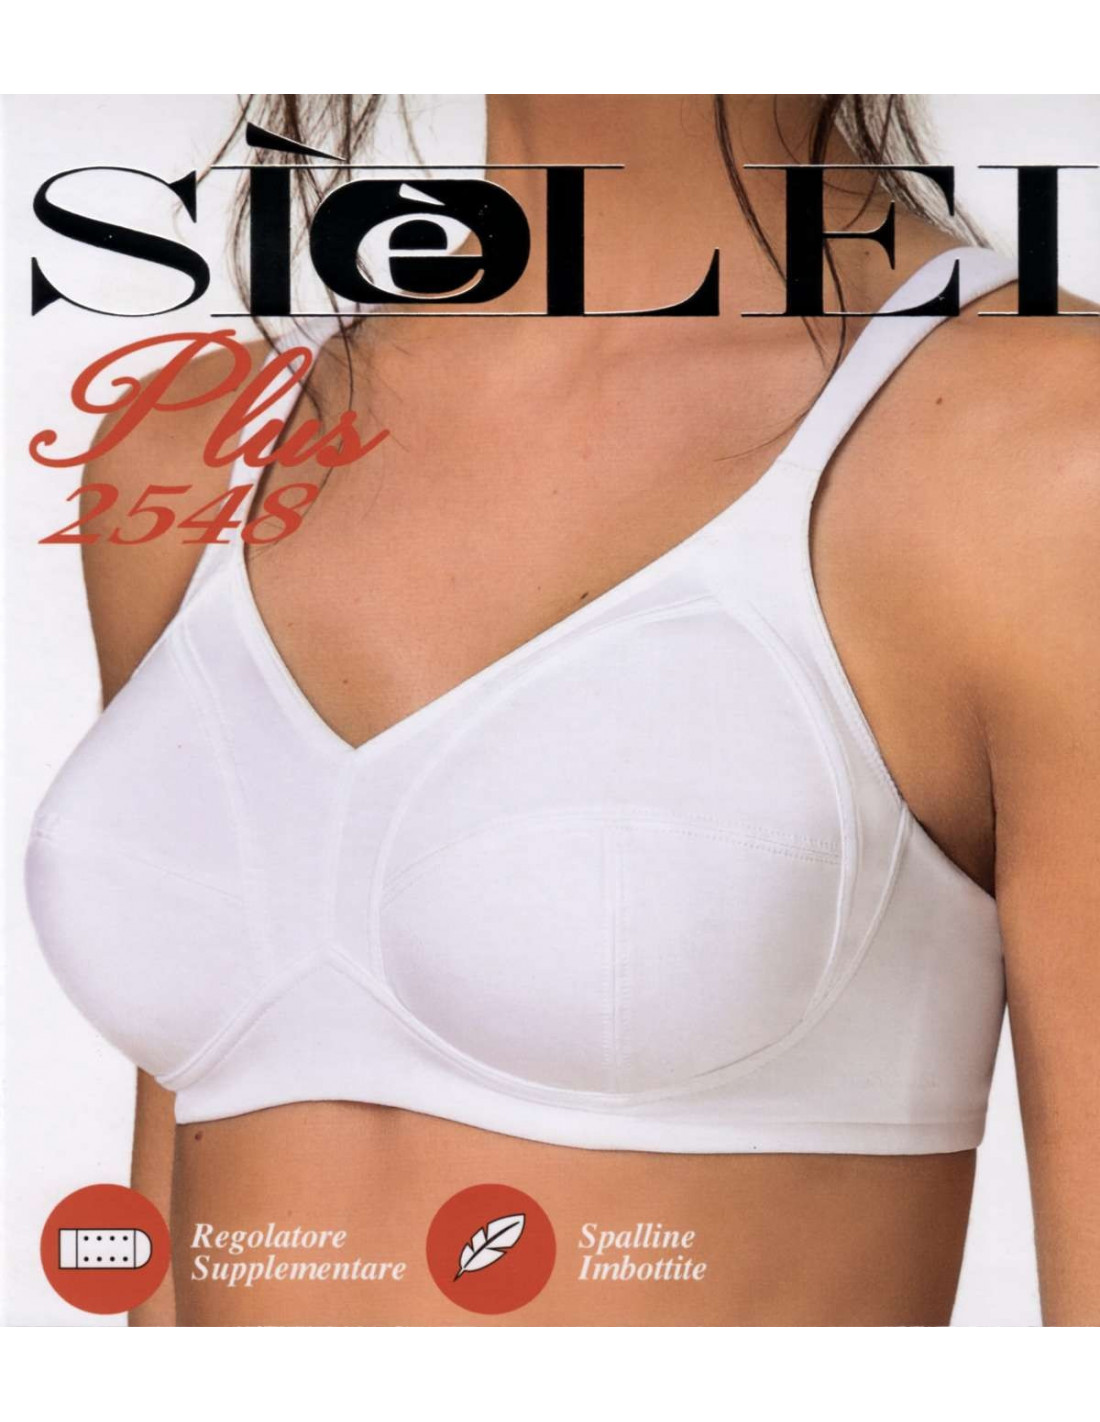 Women's calibrated bra in microfiber SieLei Plus 2548